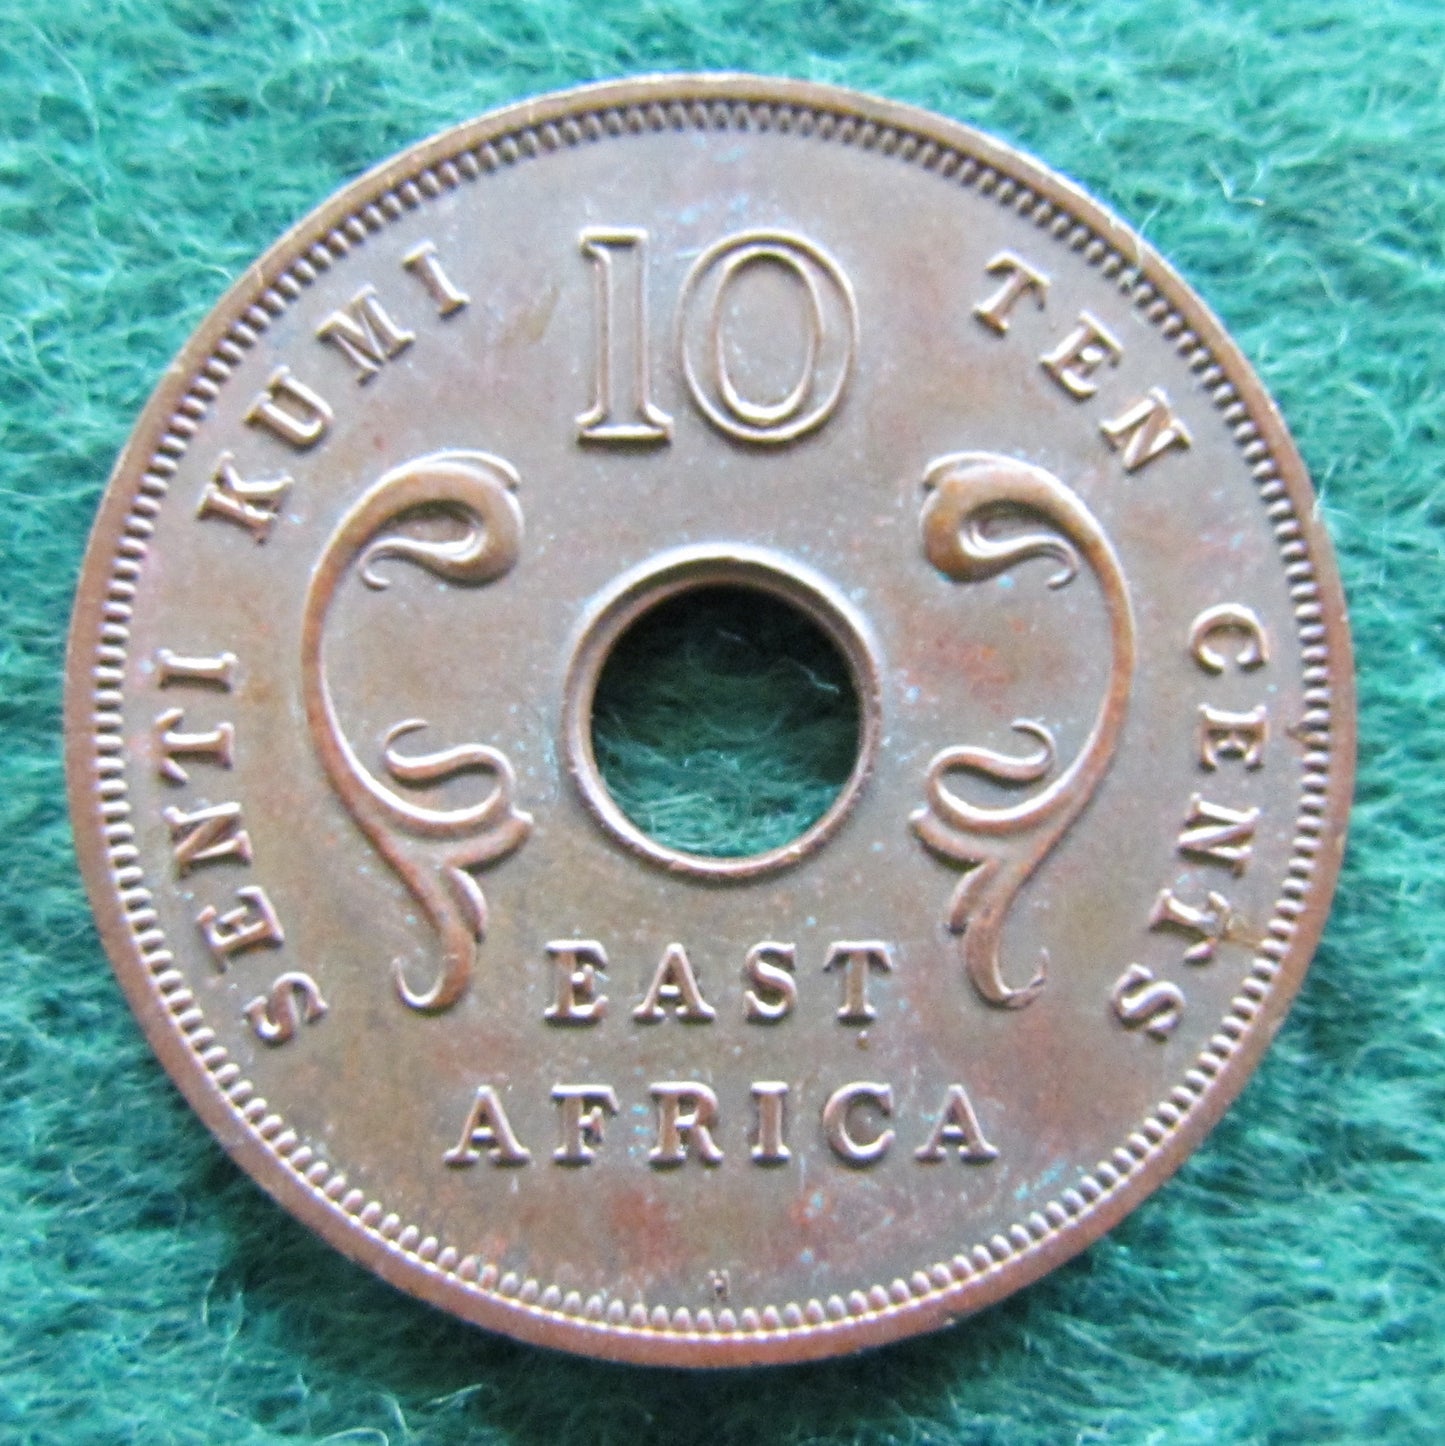 East Africa 1964 10 Cent Queen Elizabeth II Coin - Circulated